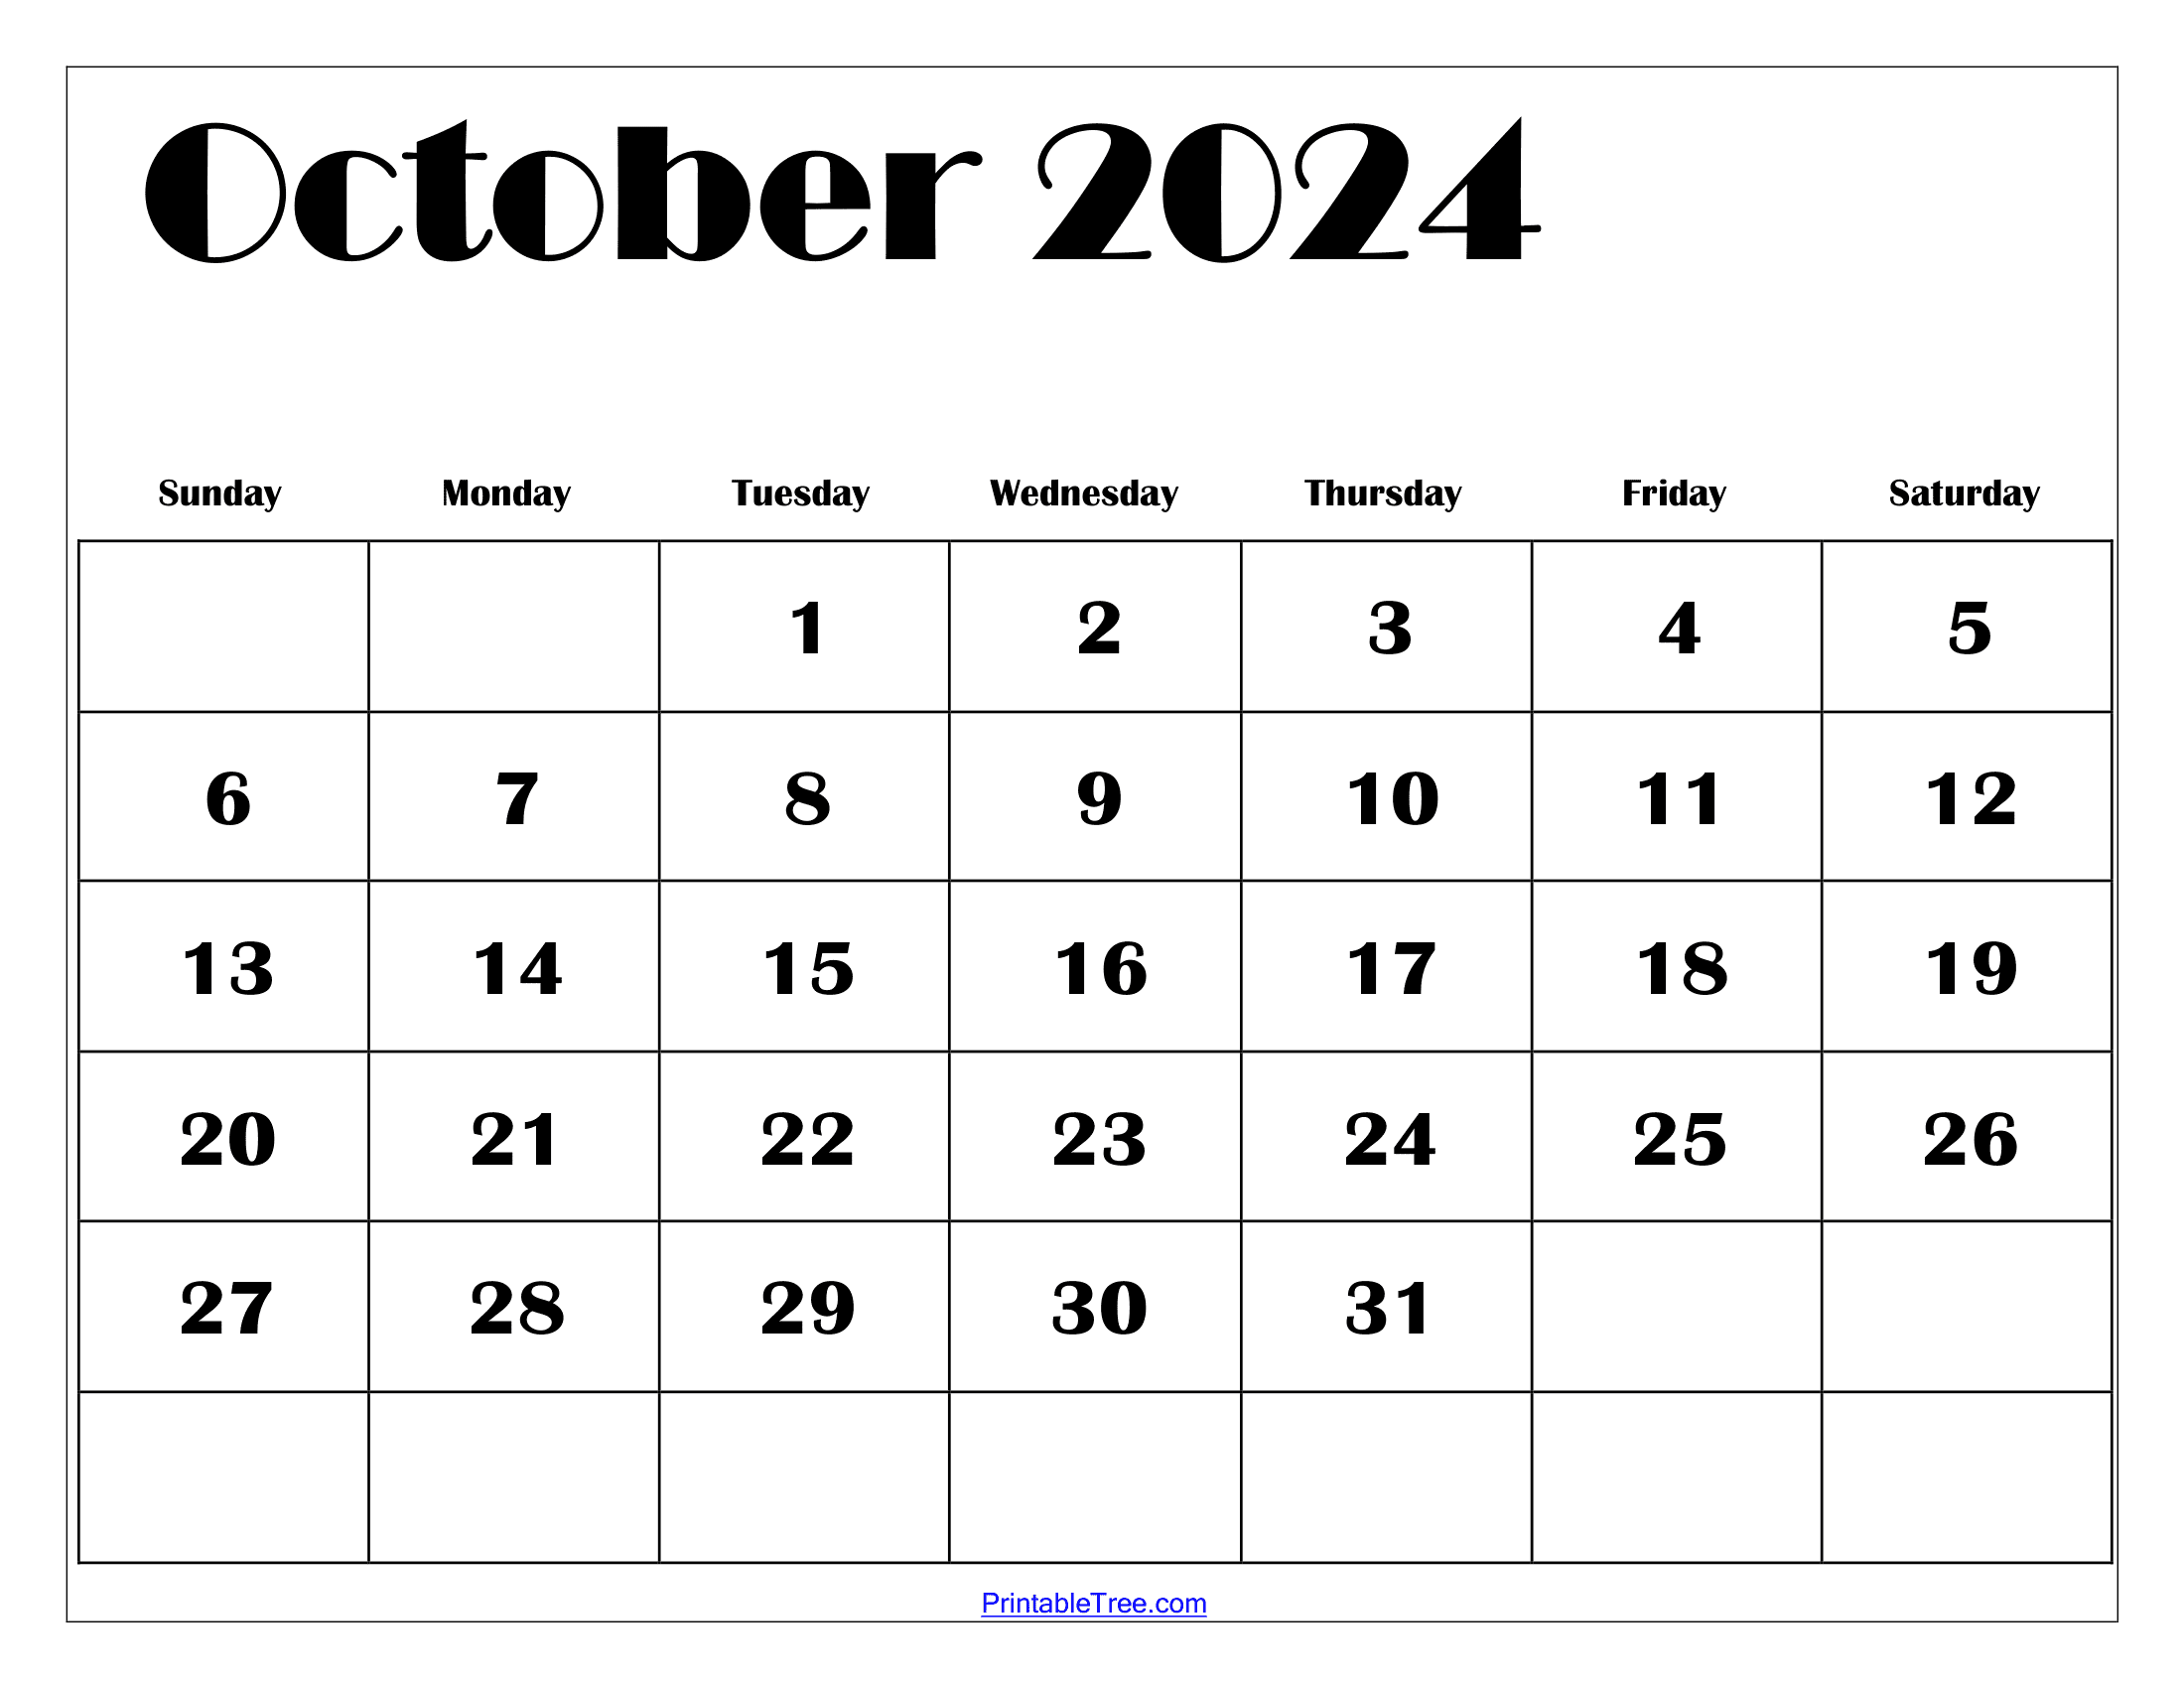 October 2024 Calendar Printable Pdf Free Templates With Holidays regarding Free Printable Blank October Calendar 2024